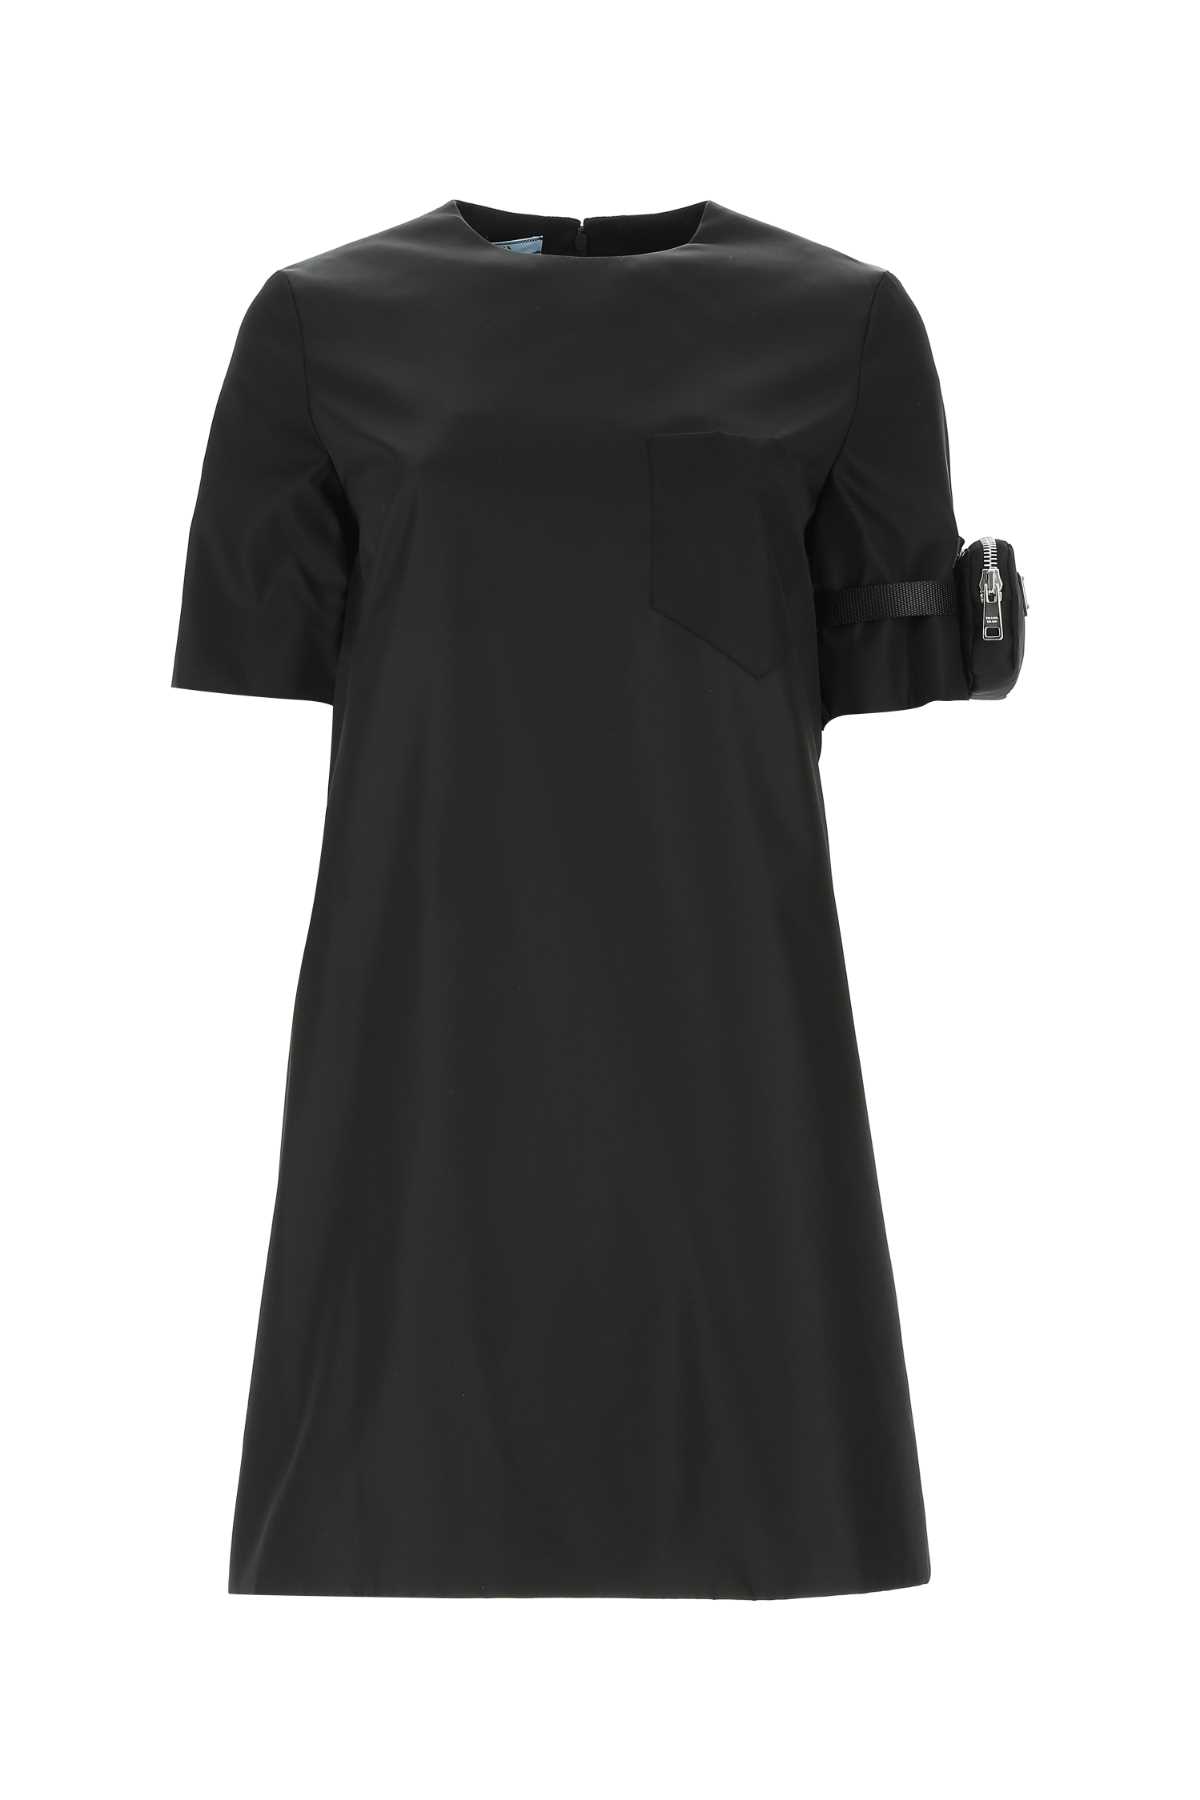 Prada Black Re-nylon Dress